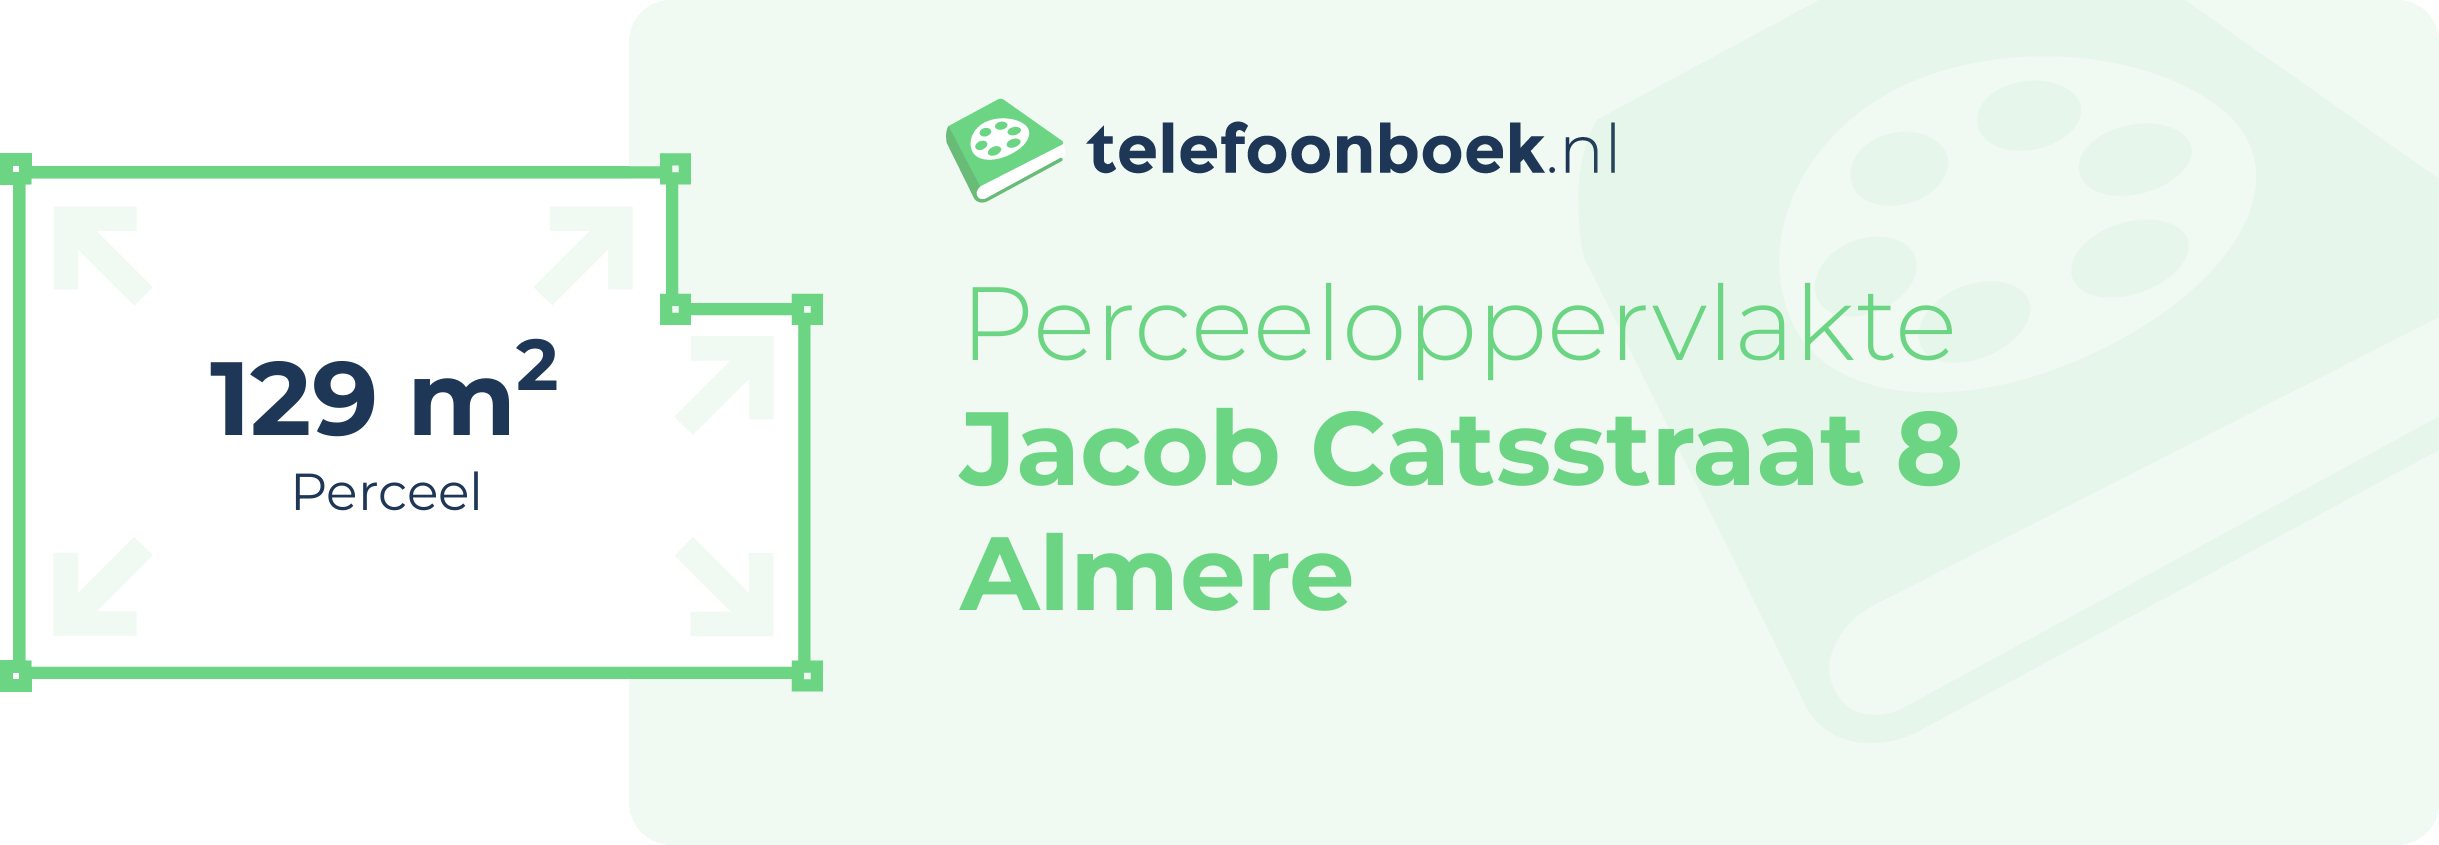 Perceeloppervlakte Jacob Catsstraat 8 Almere